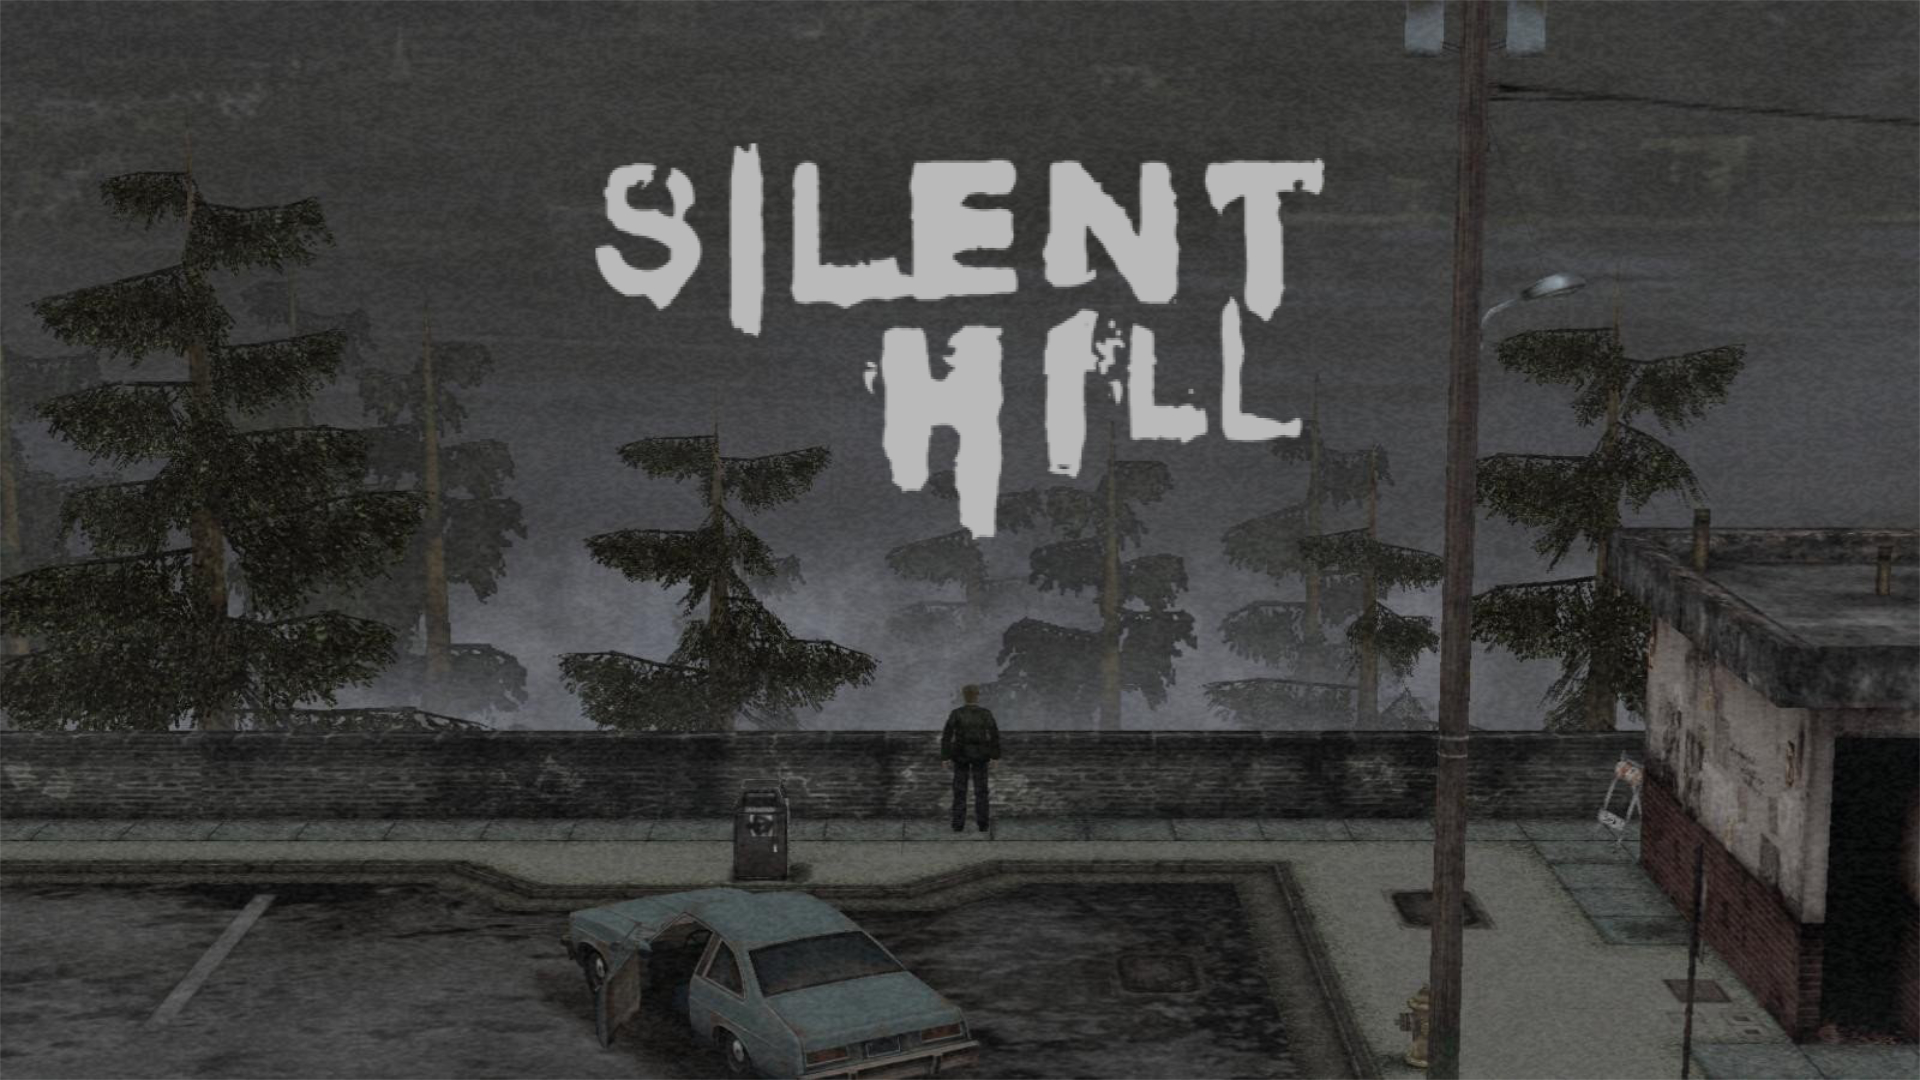 SILENT HILL 2 : Enhanced Edition